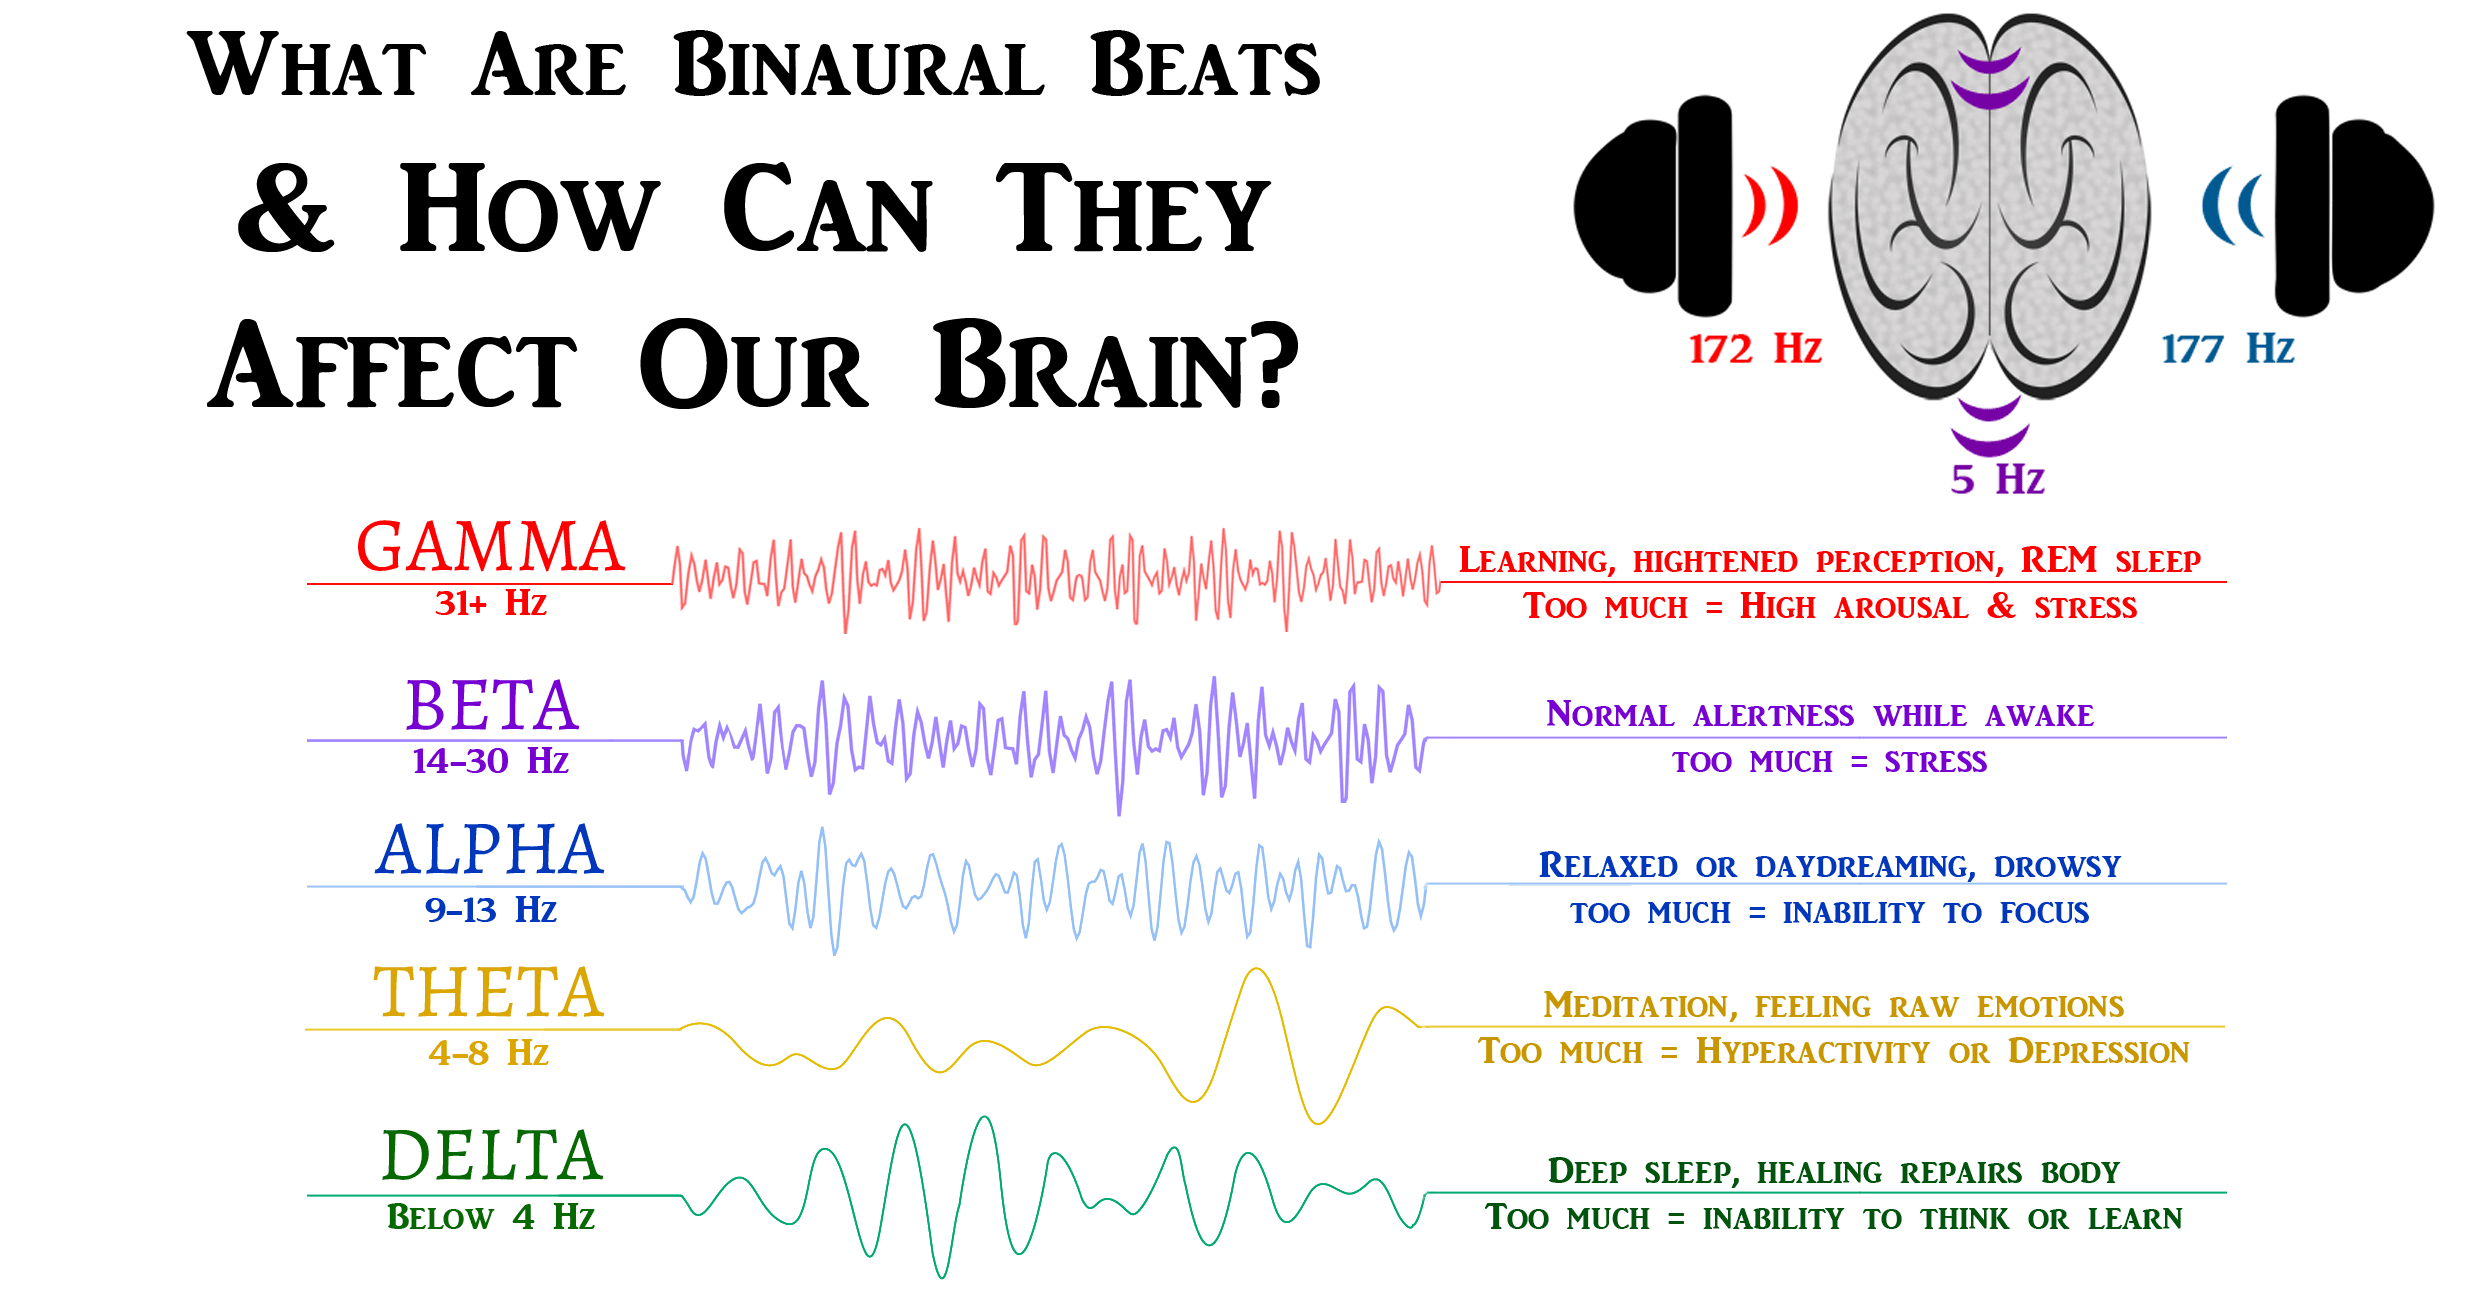 binaural sound for ableton live